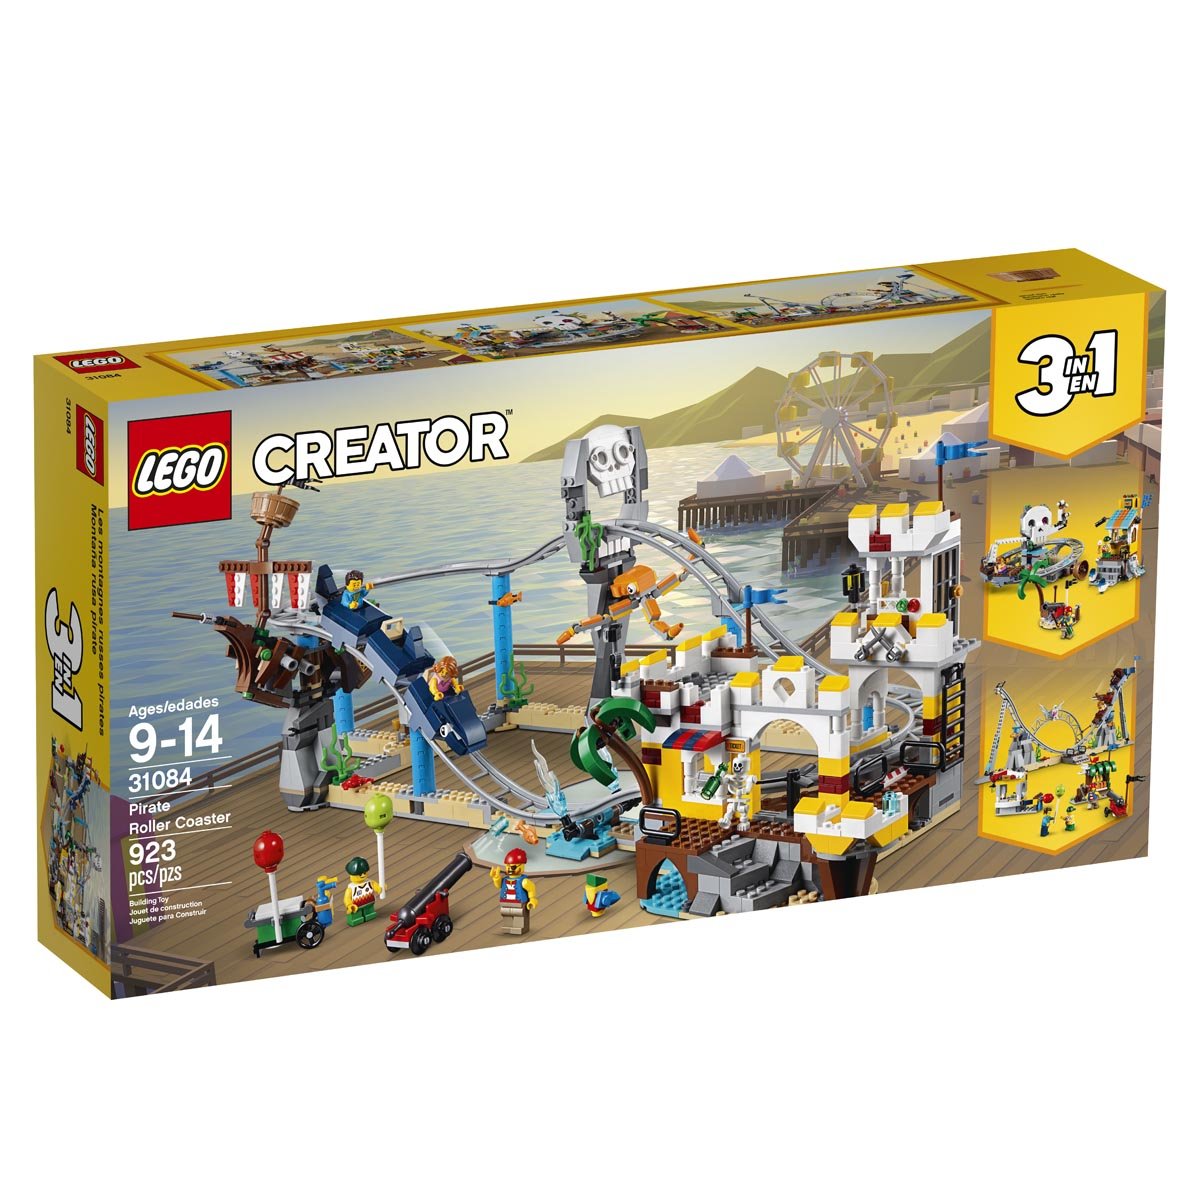 Creator Roller Coaster Lego